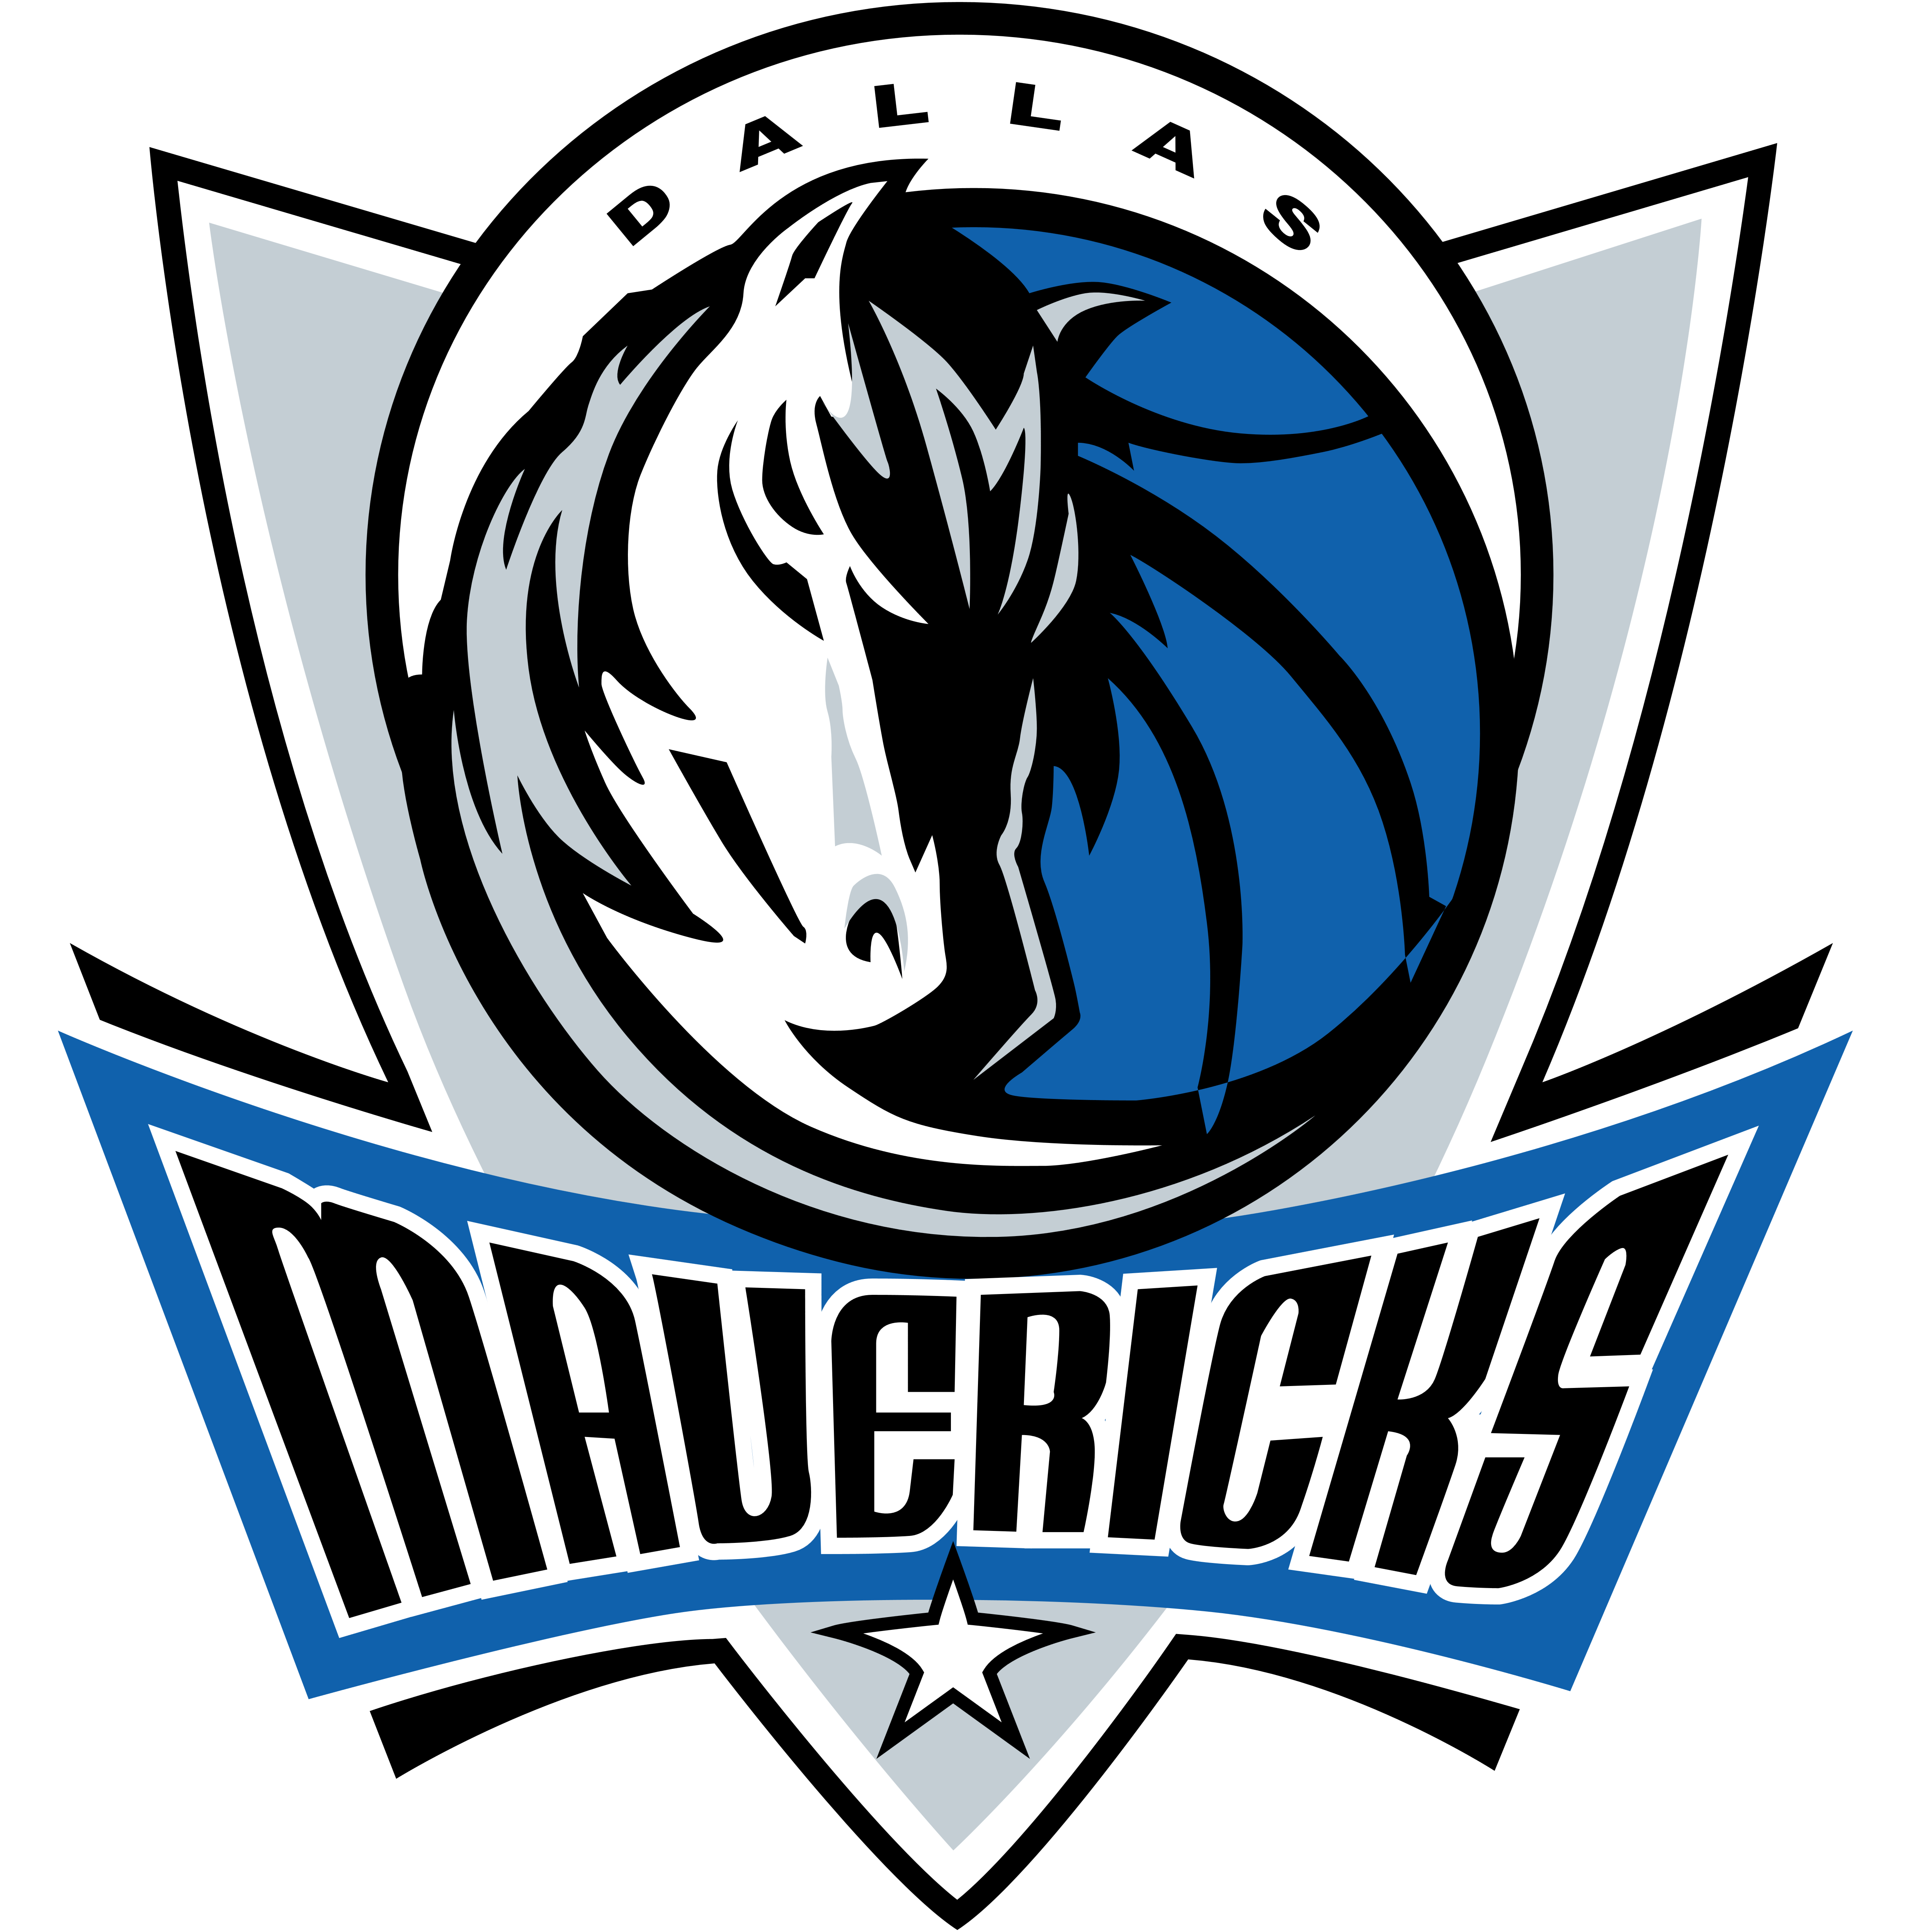 Dallas Mavericks Logos Download